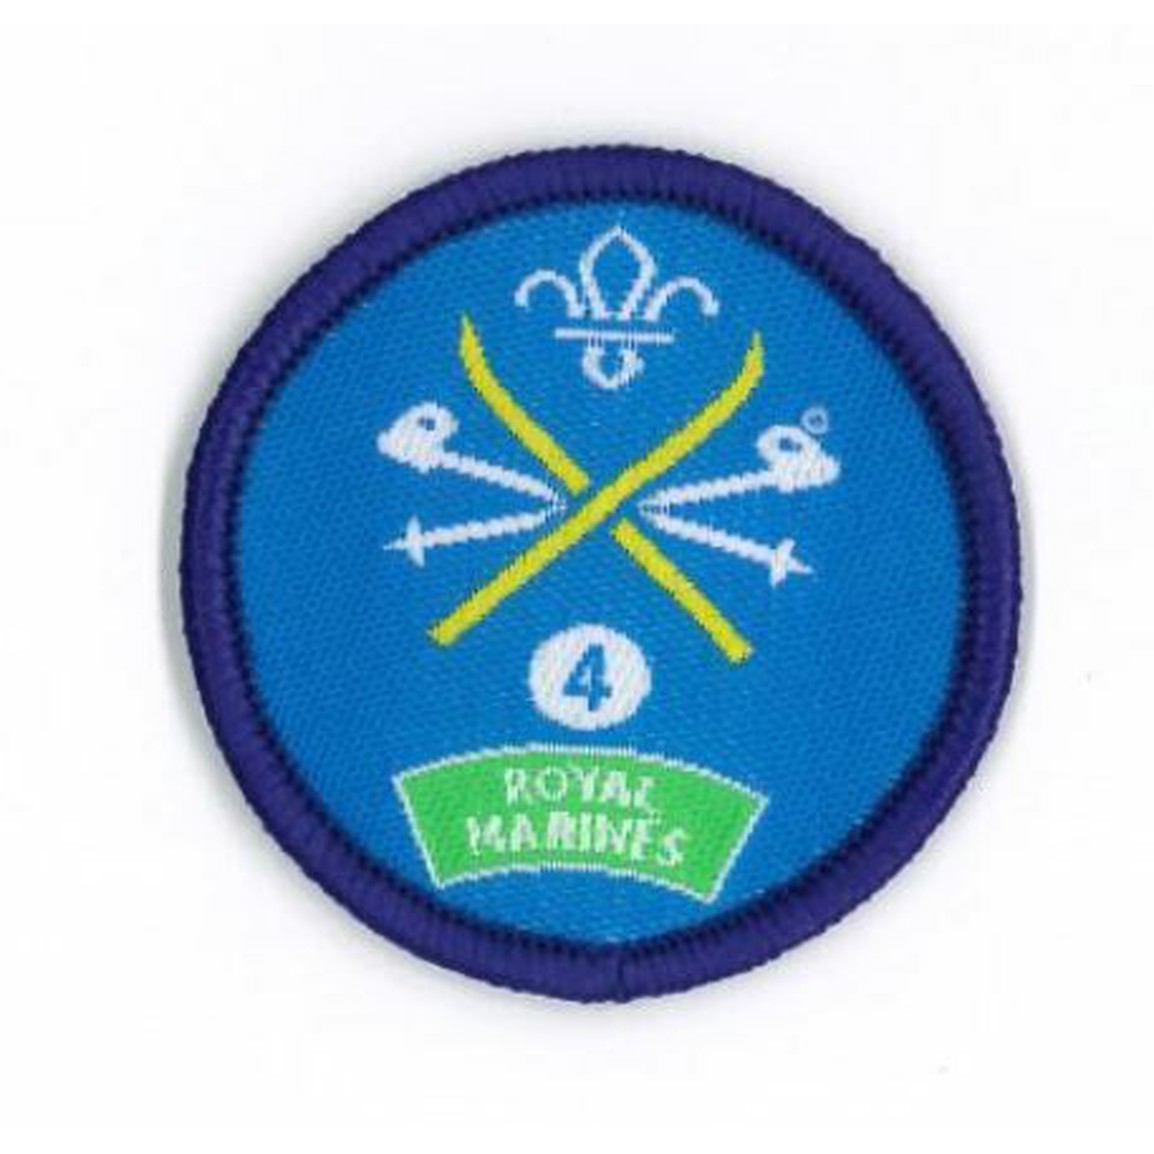 Snowsports Staged Activity Badge (Royal Marines)